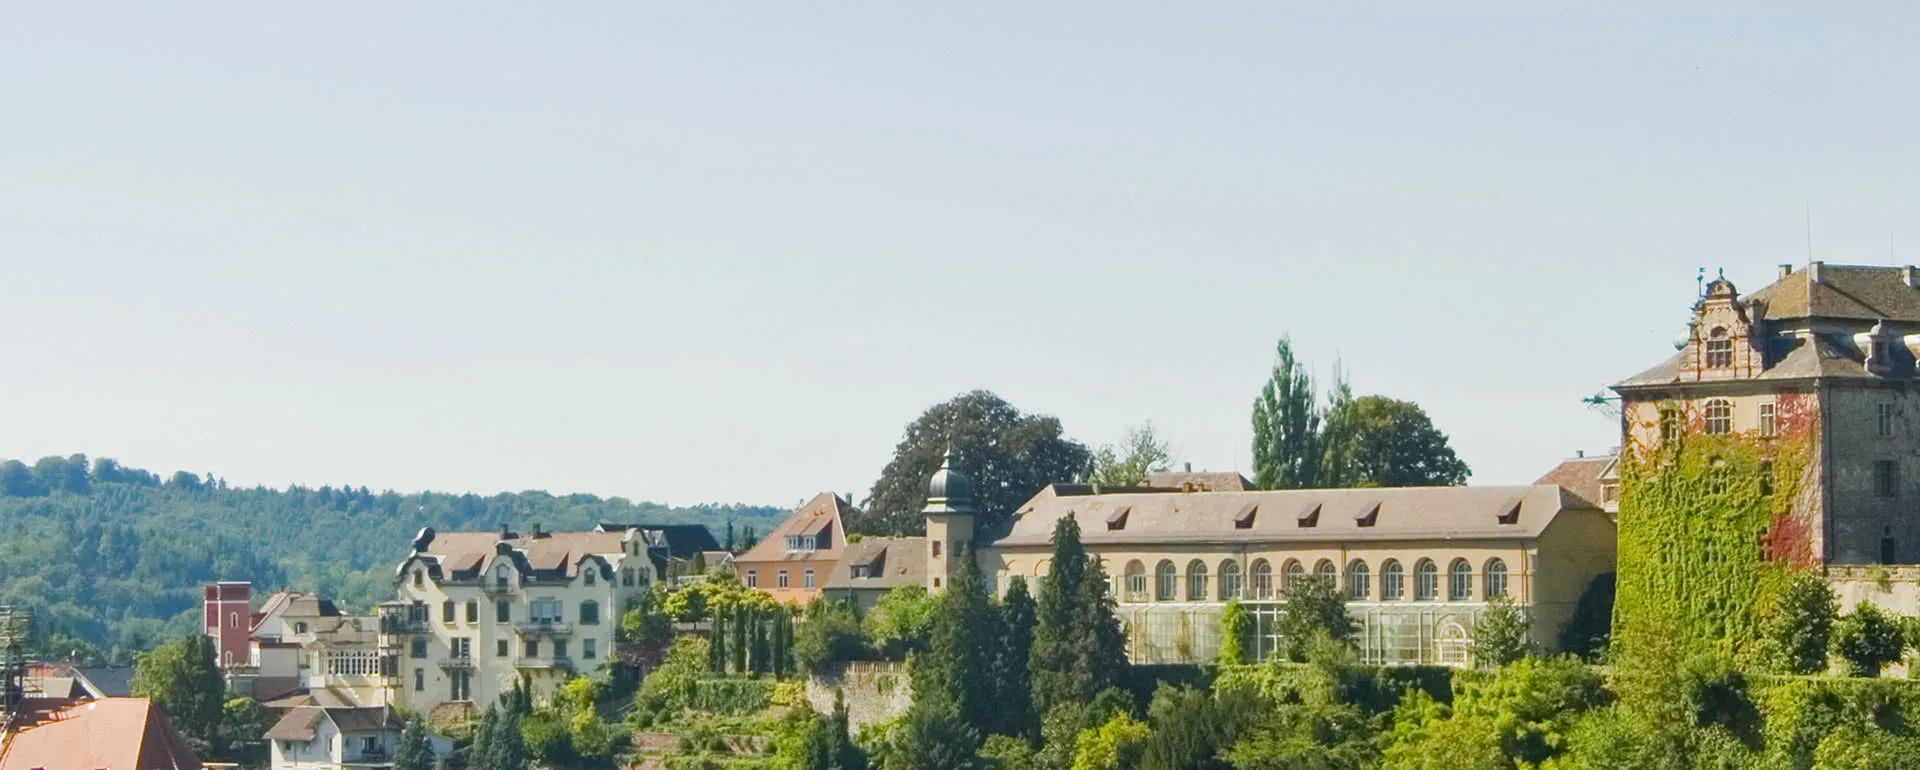 Baden-Baden panorama image